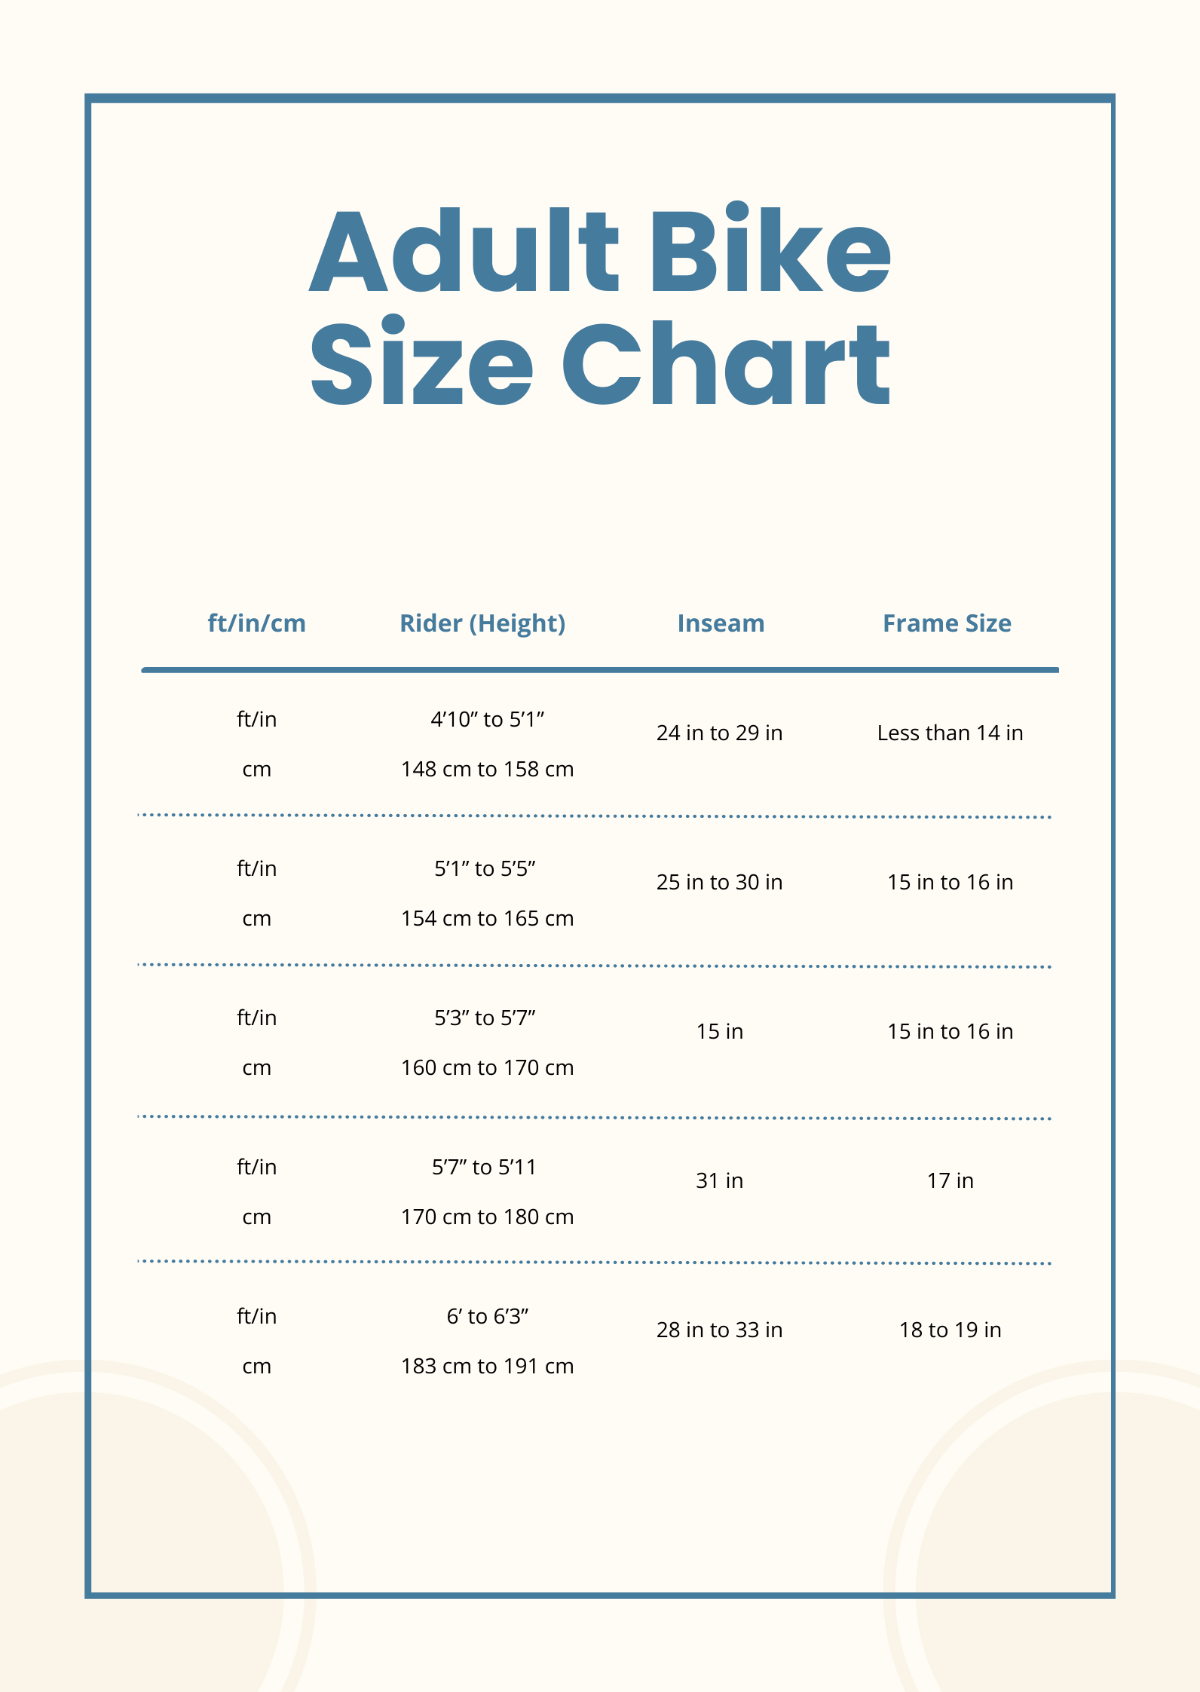 Adult Bike Size Chart